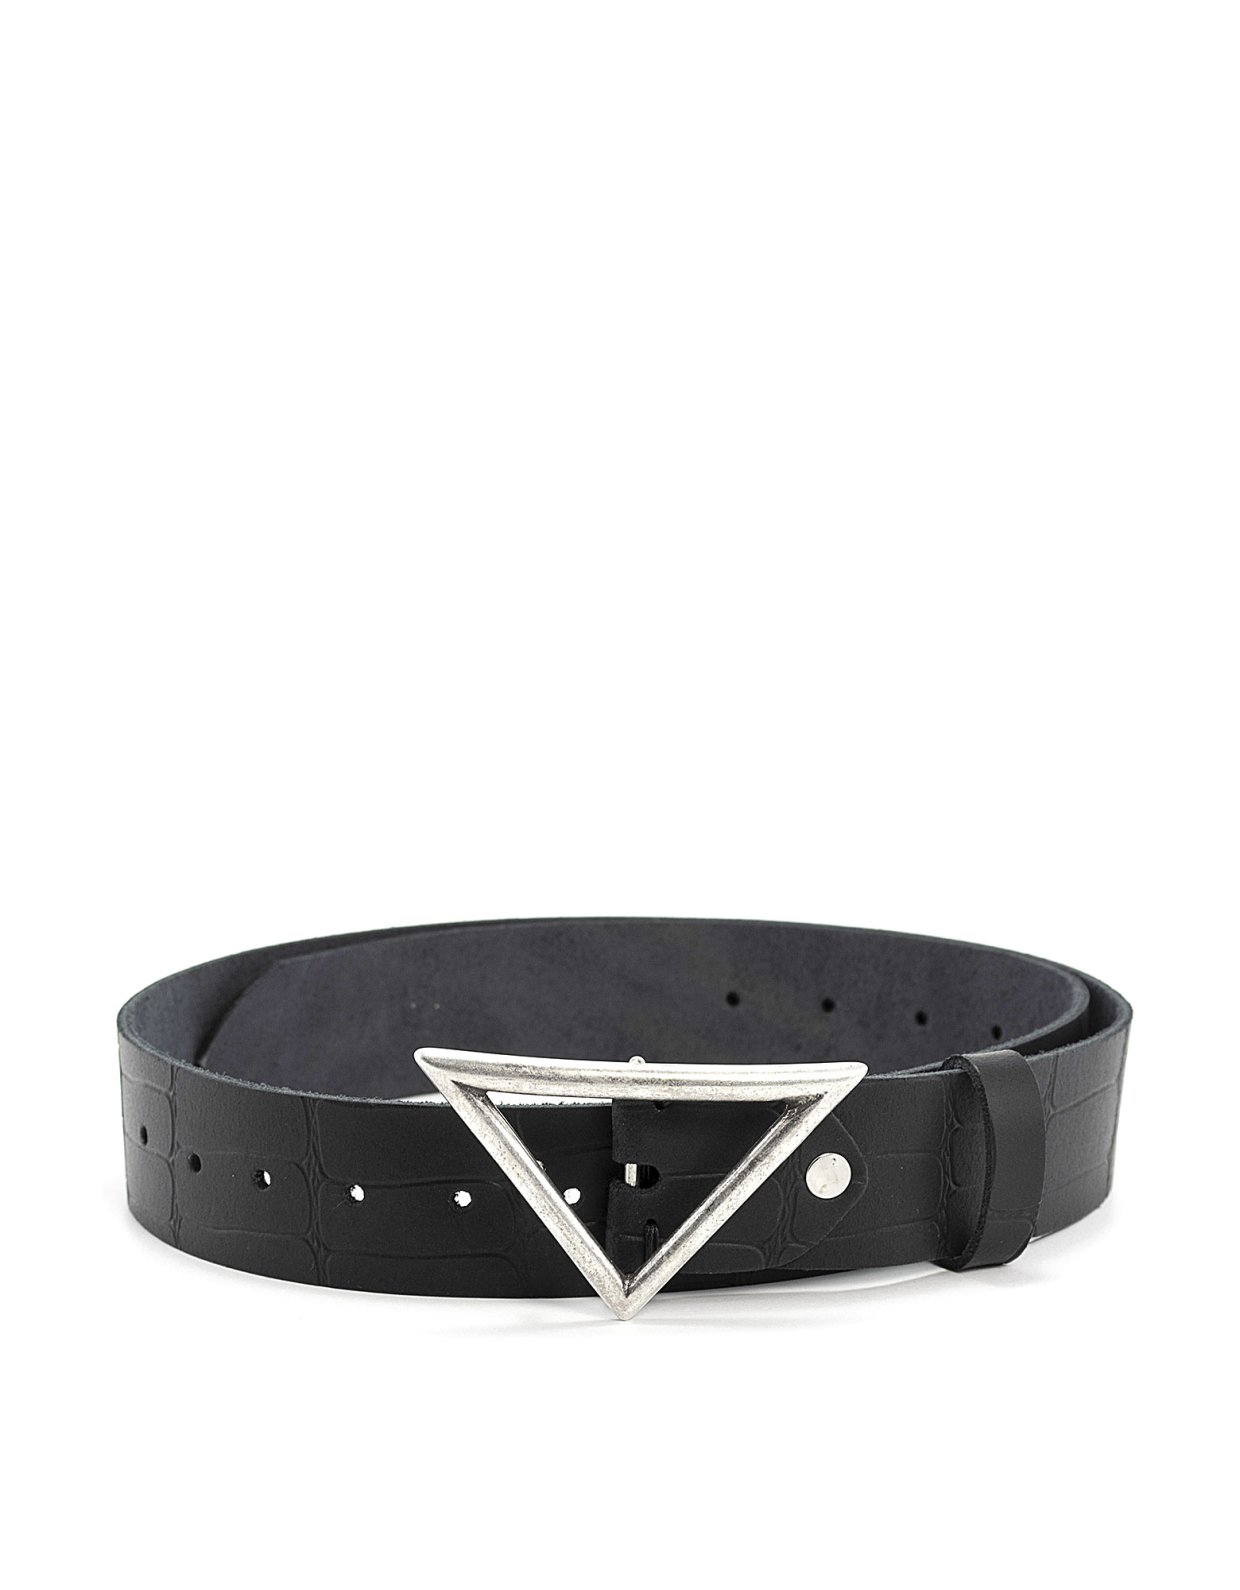 Individual Art Leather True belt black croco